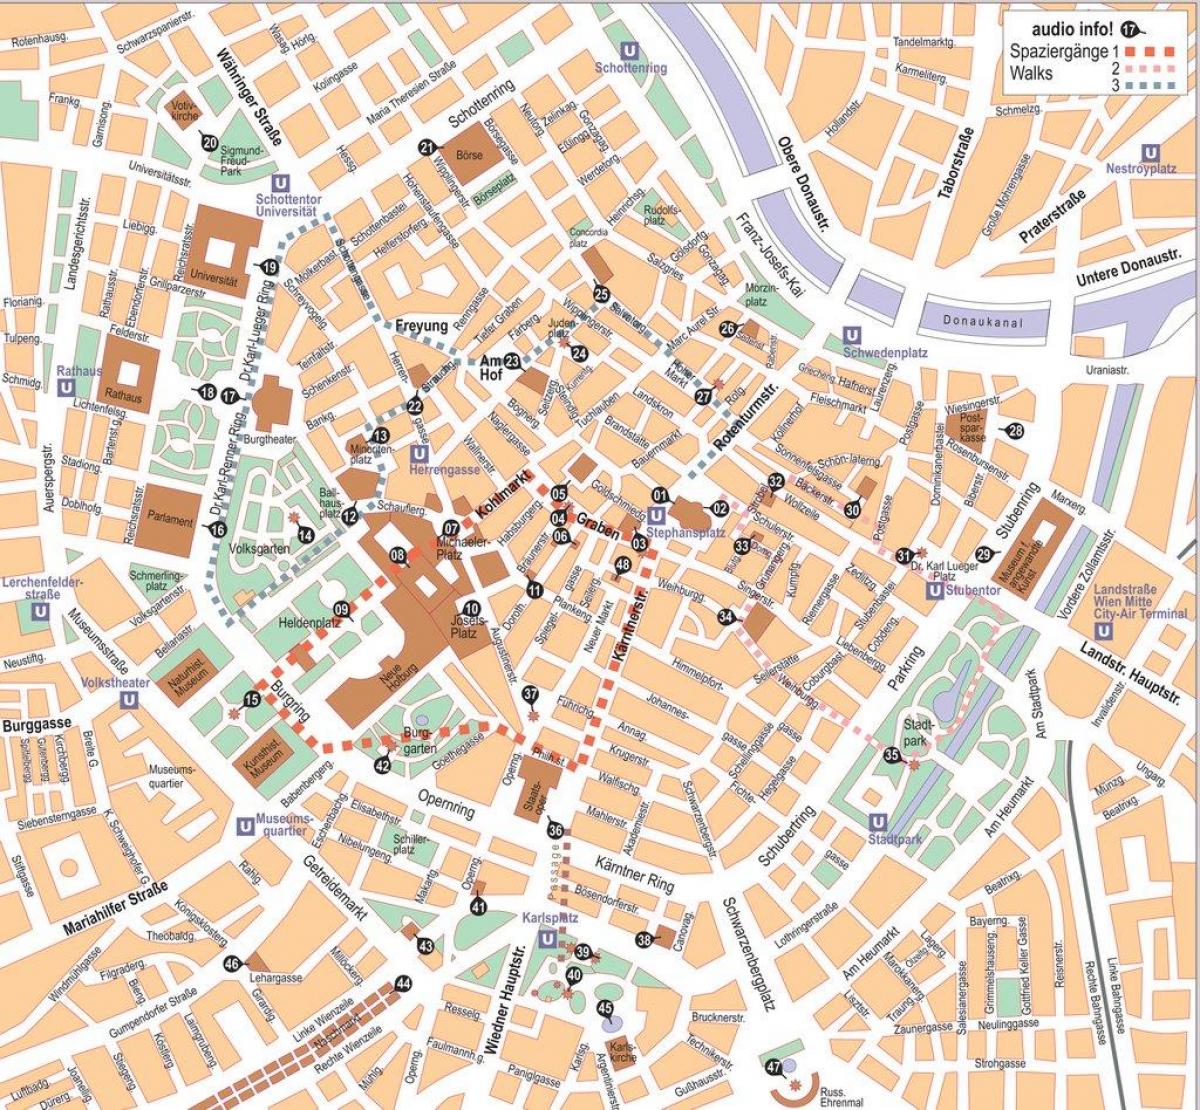 Peta Wina kota offline